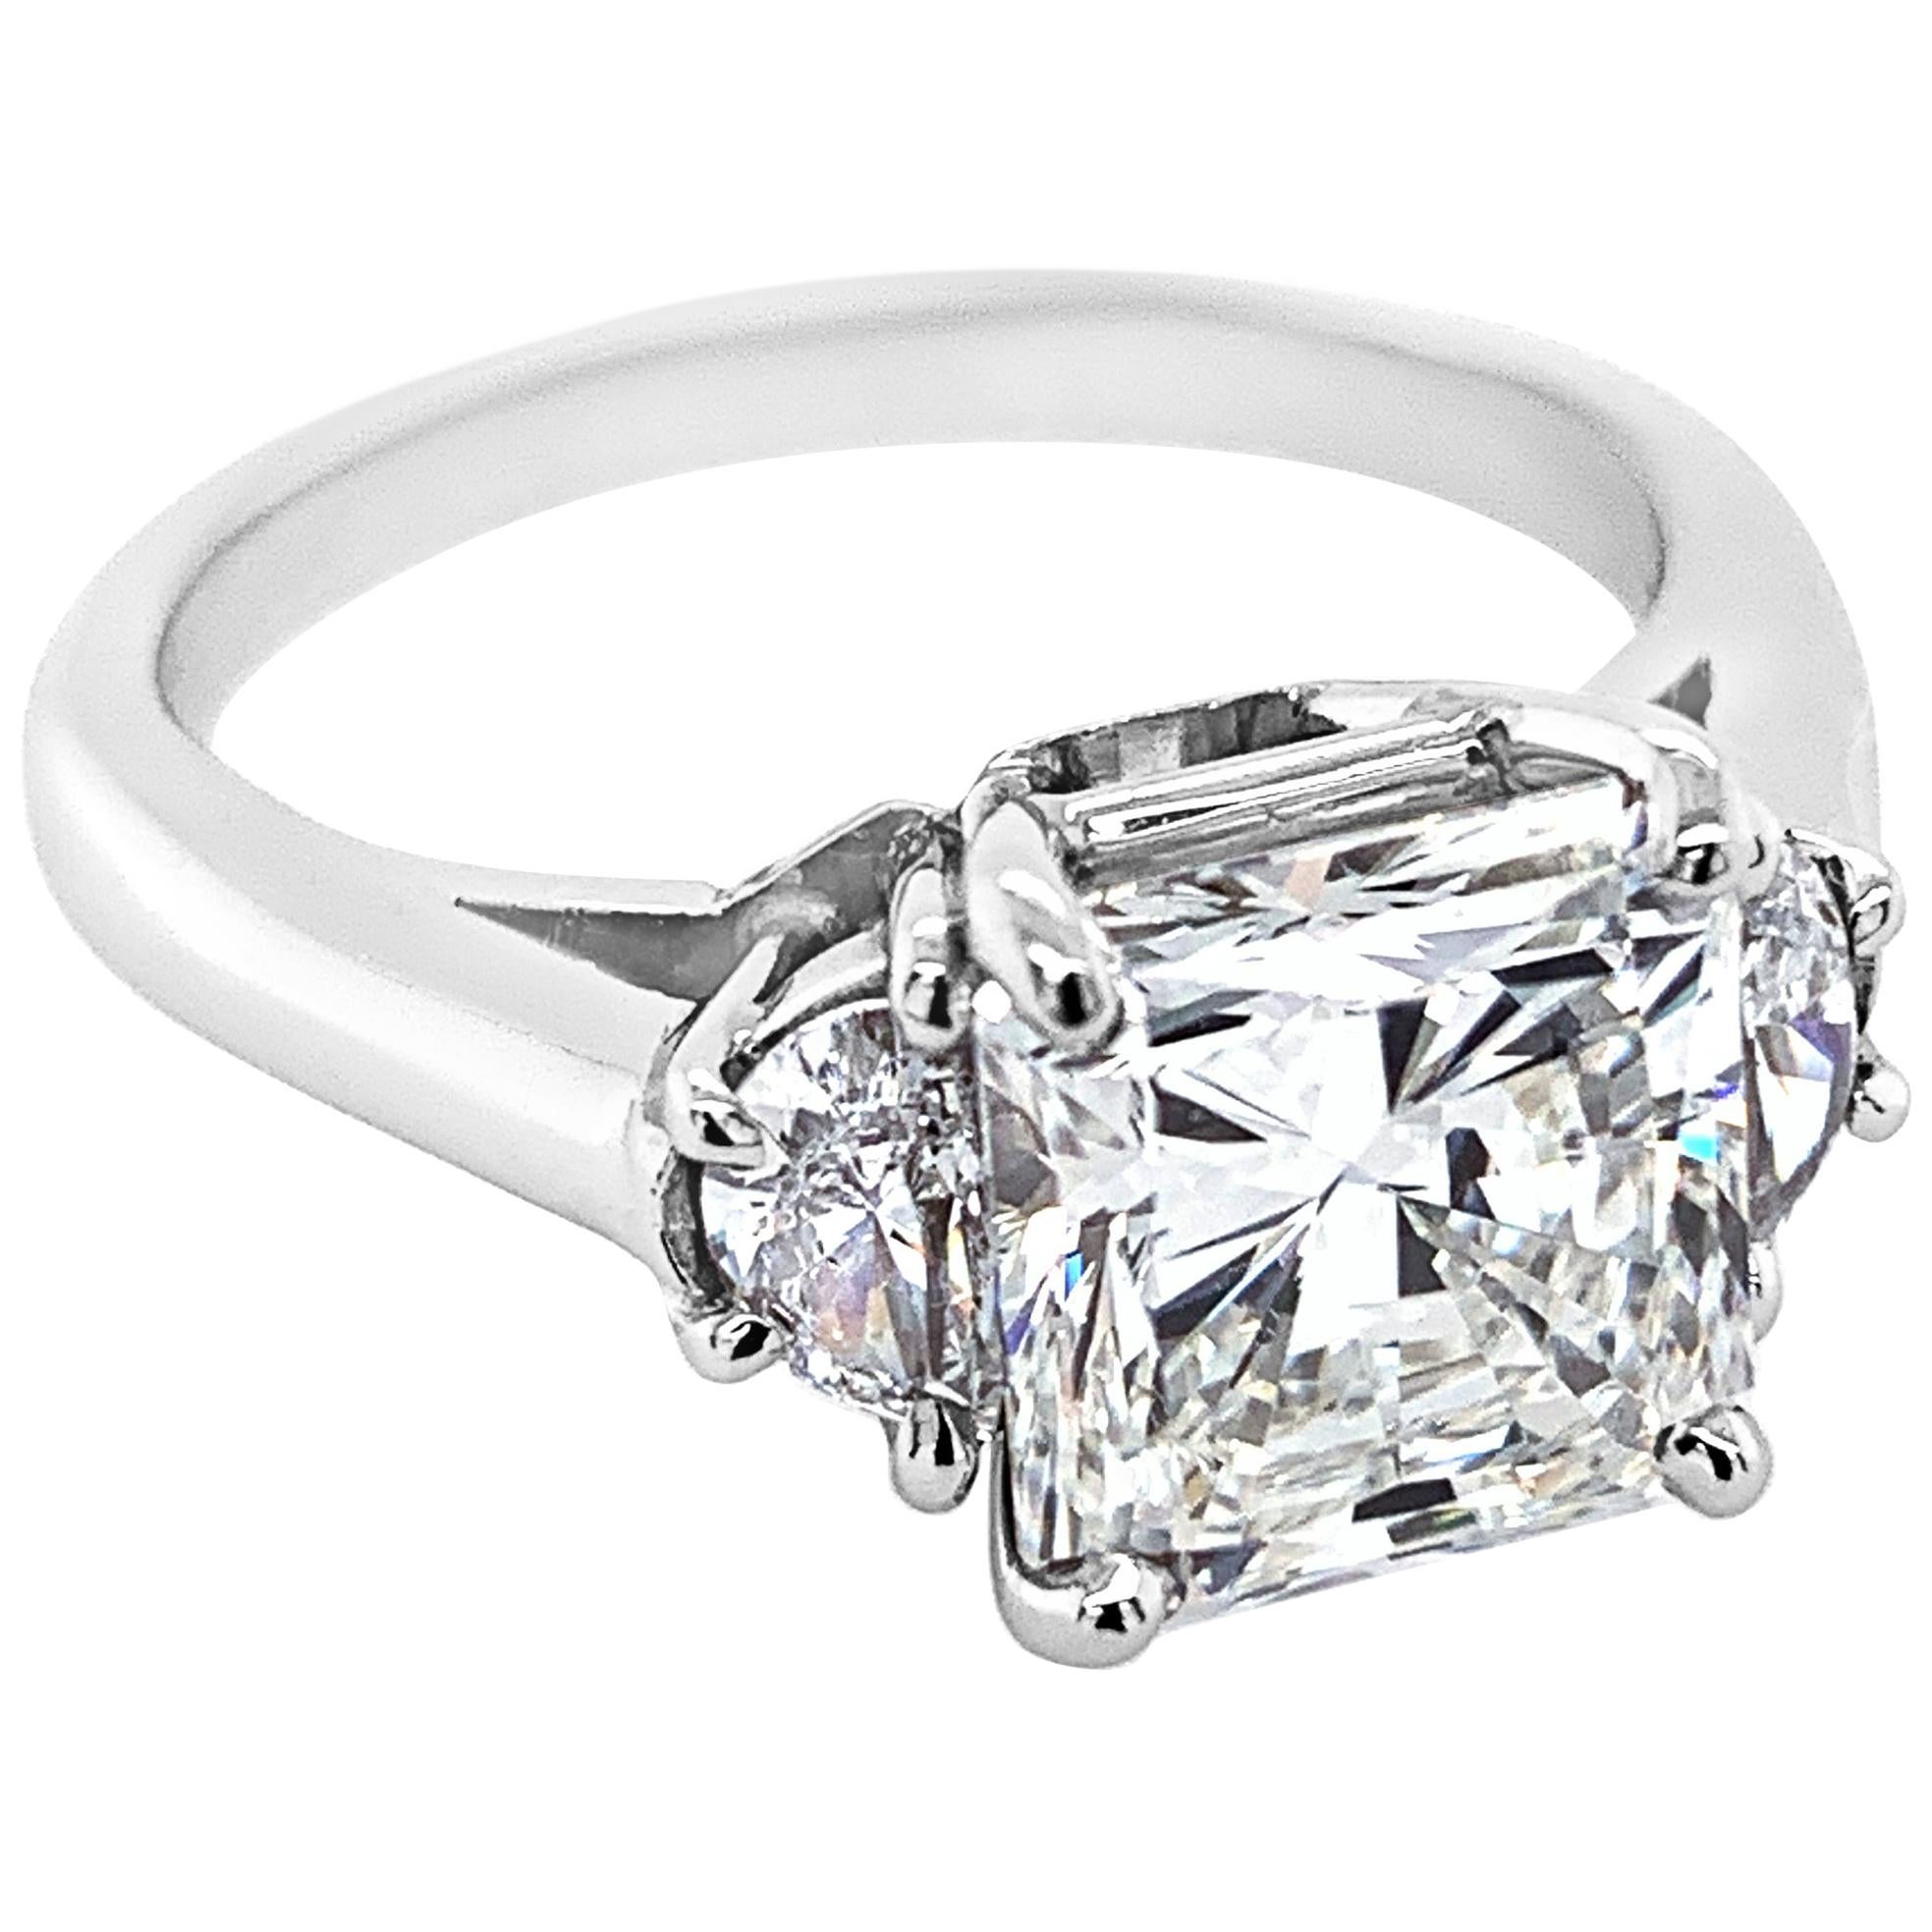 3.02 Carat Radiant Cut Diamond Platinum Ring with Half-Moon Side Diamonds